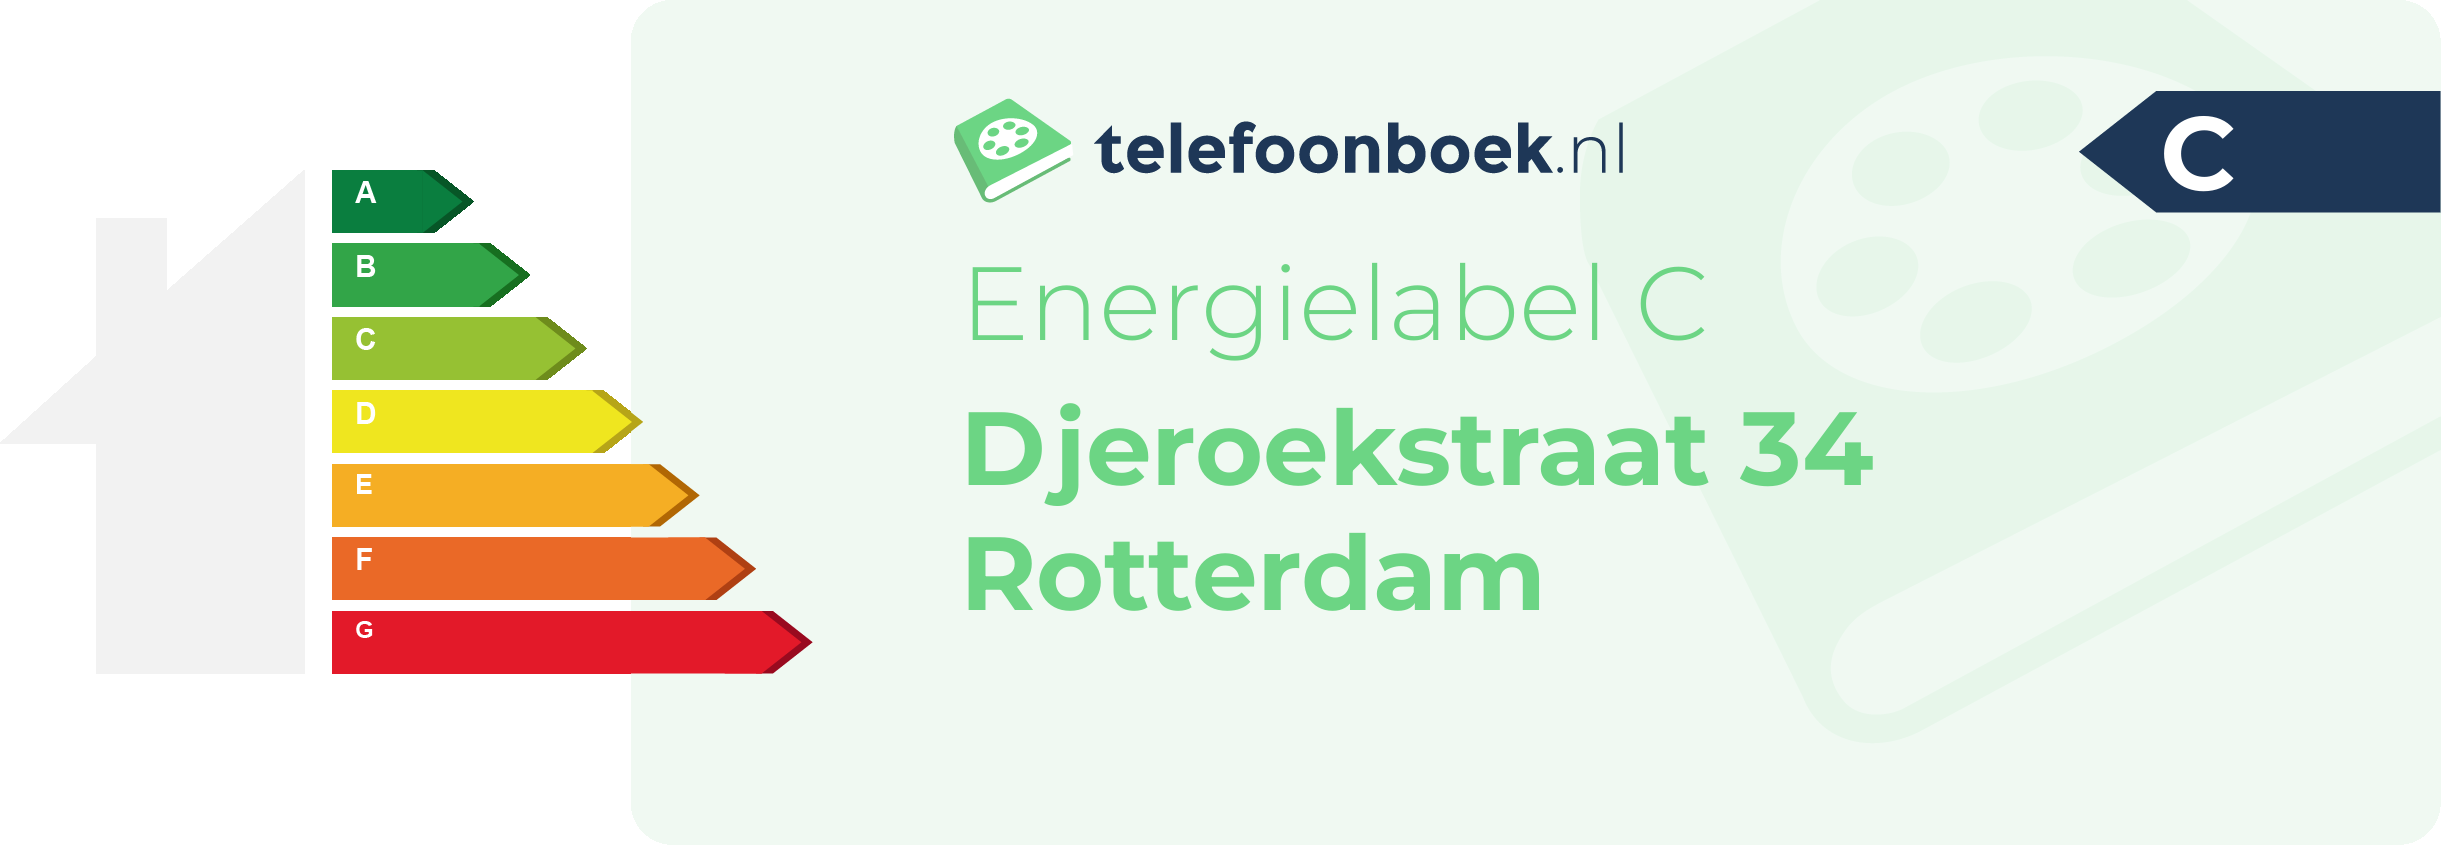 Energielabel Djeroekstraat 34 Rotterdam